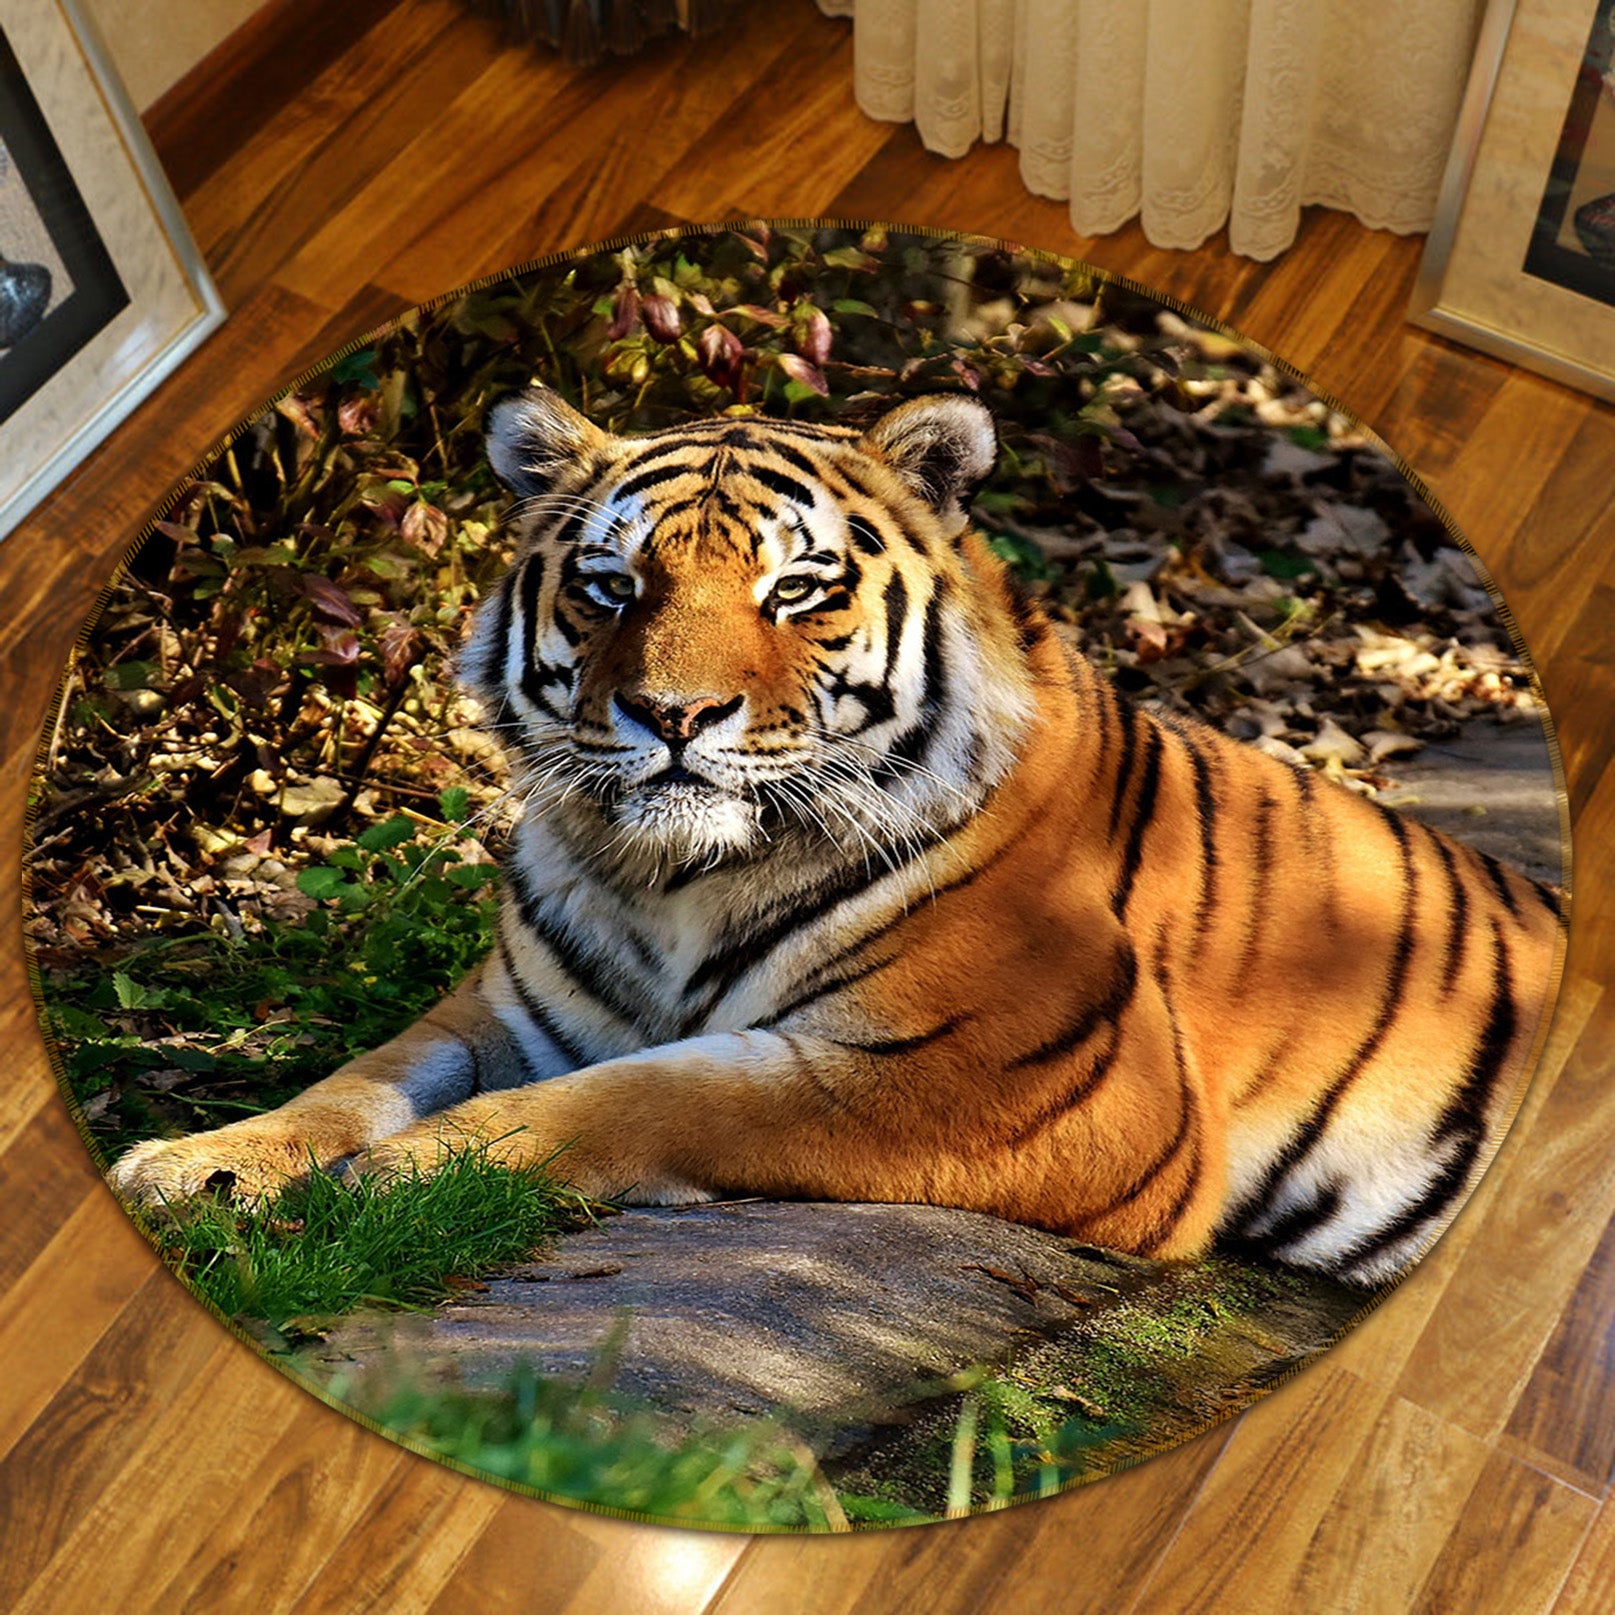 3D Tiger 82284 Animal Round Non Slip Rug Mat